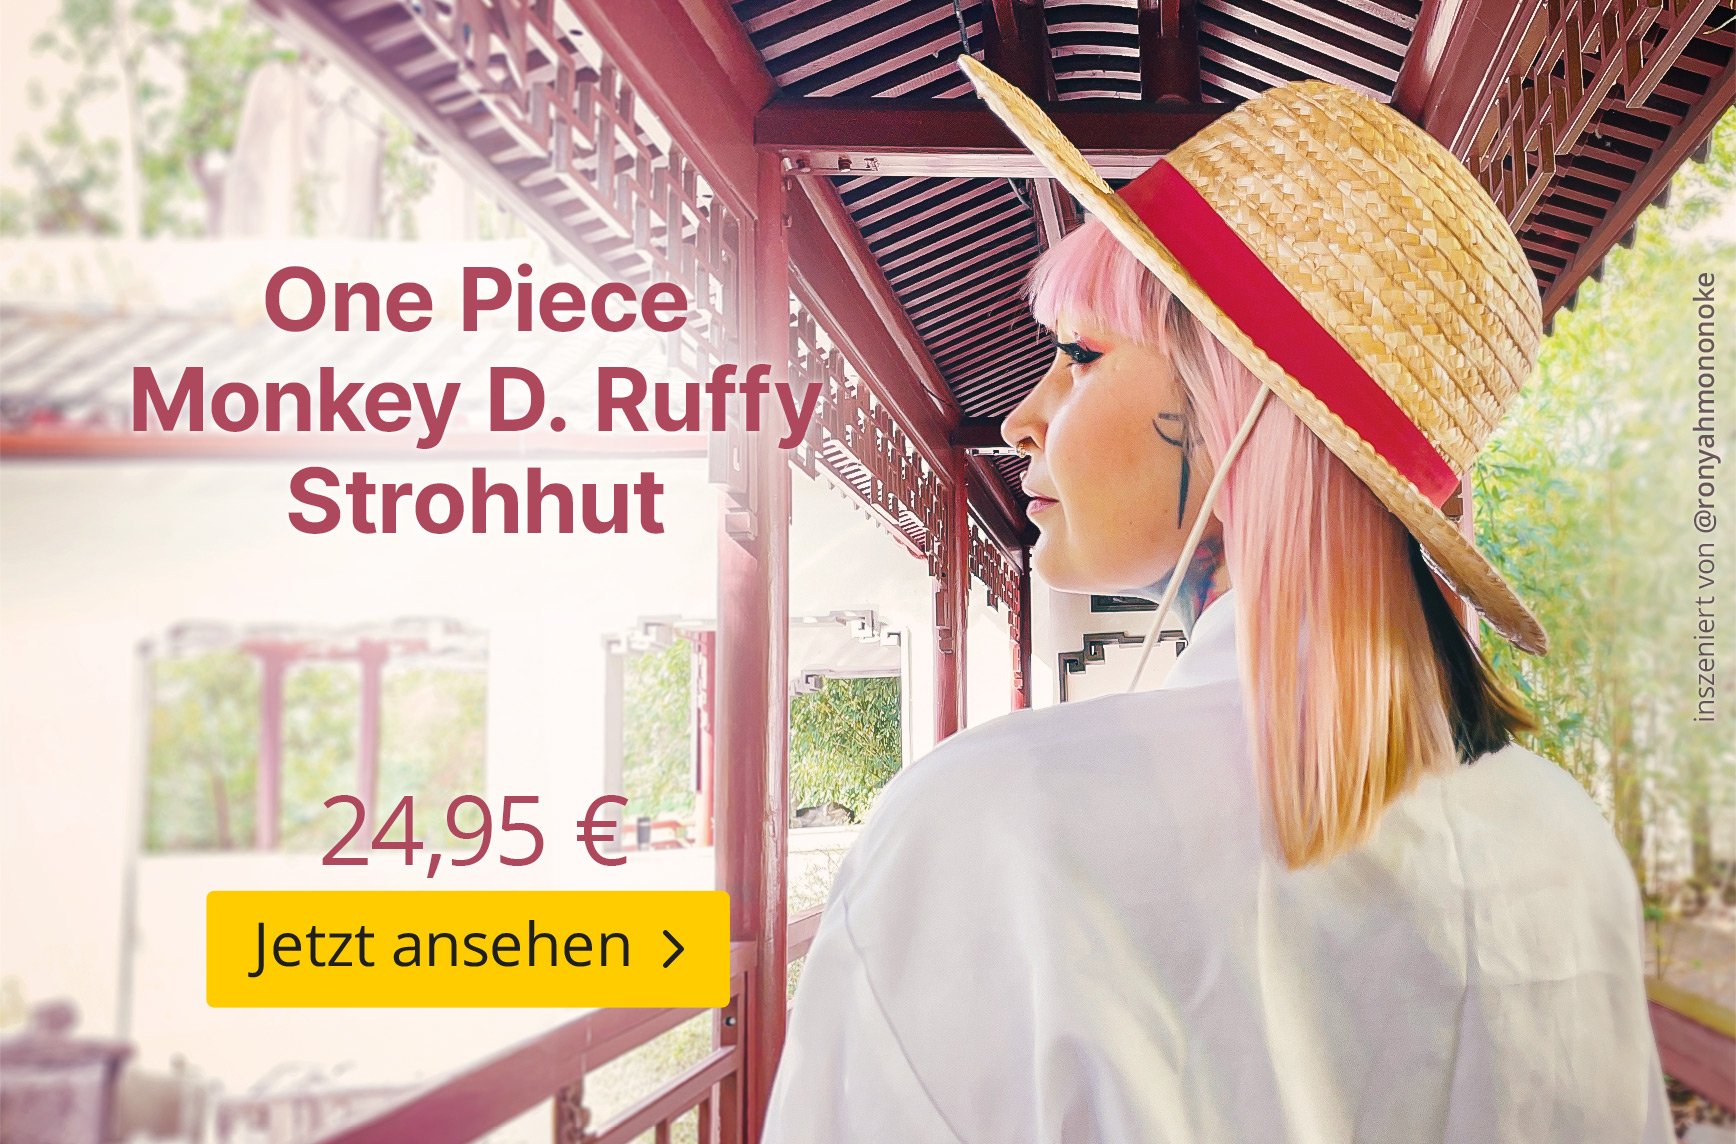 One Piece - Monkey D. Ruffy Strohhut - 24,95€